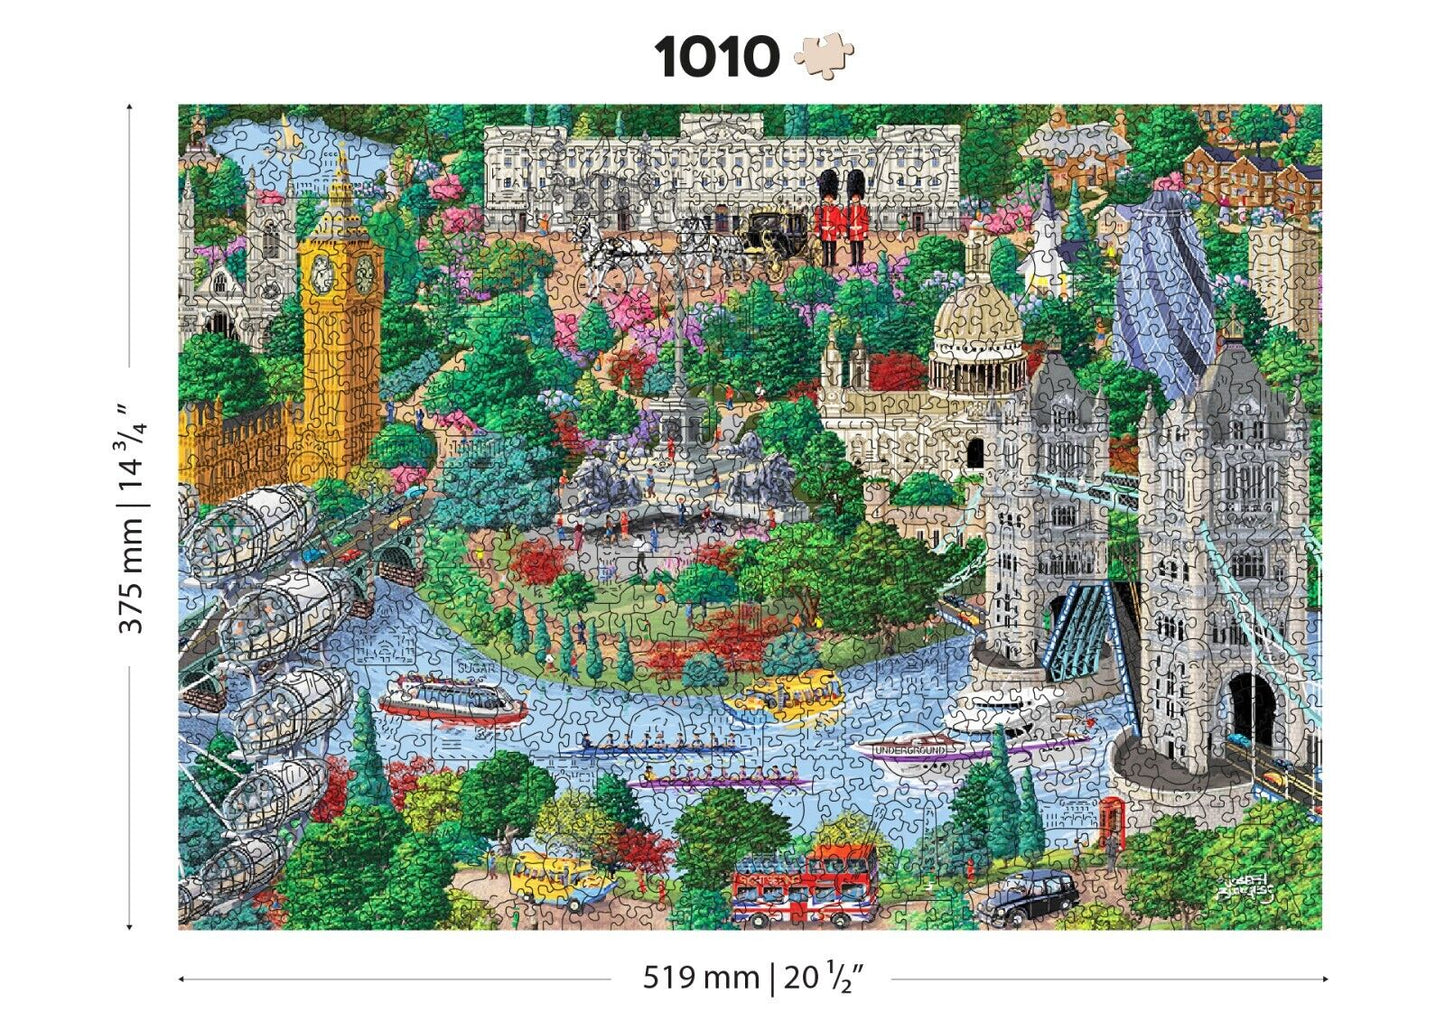 Wooden City - Jigsaw Puzzle 1000 Pcs